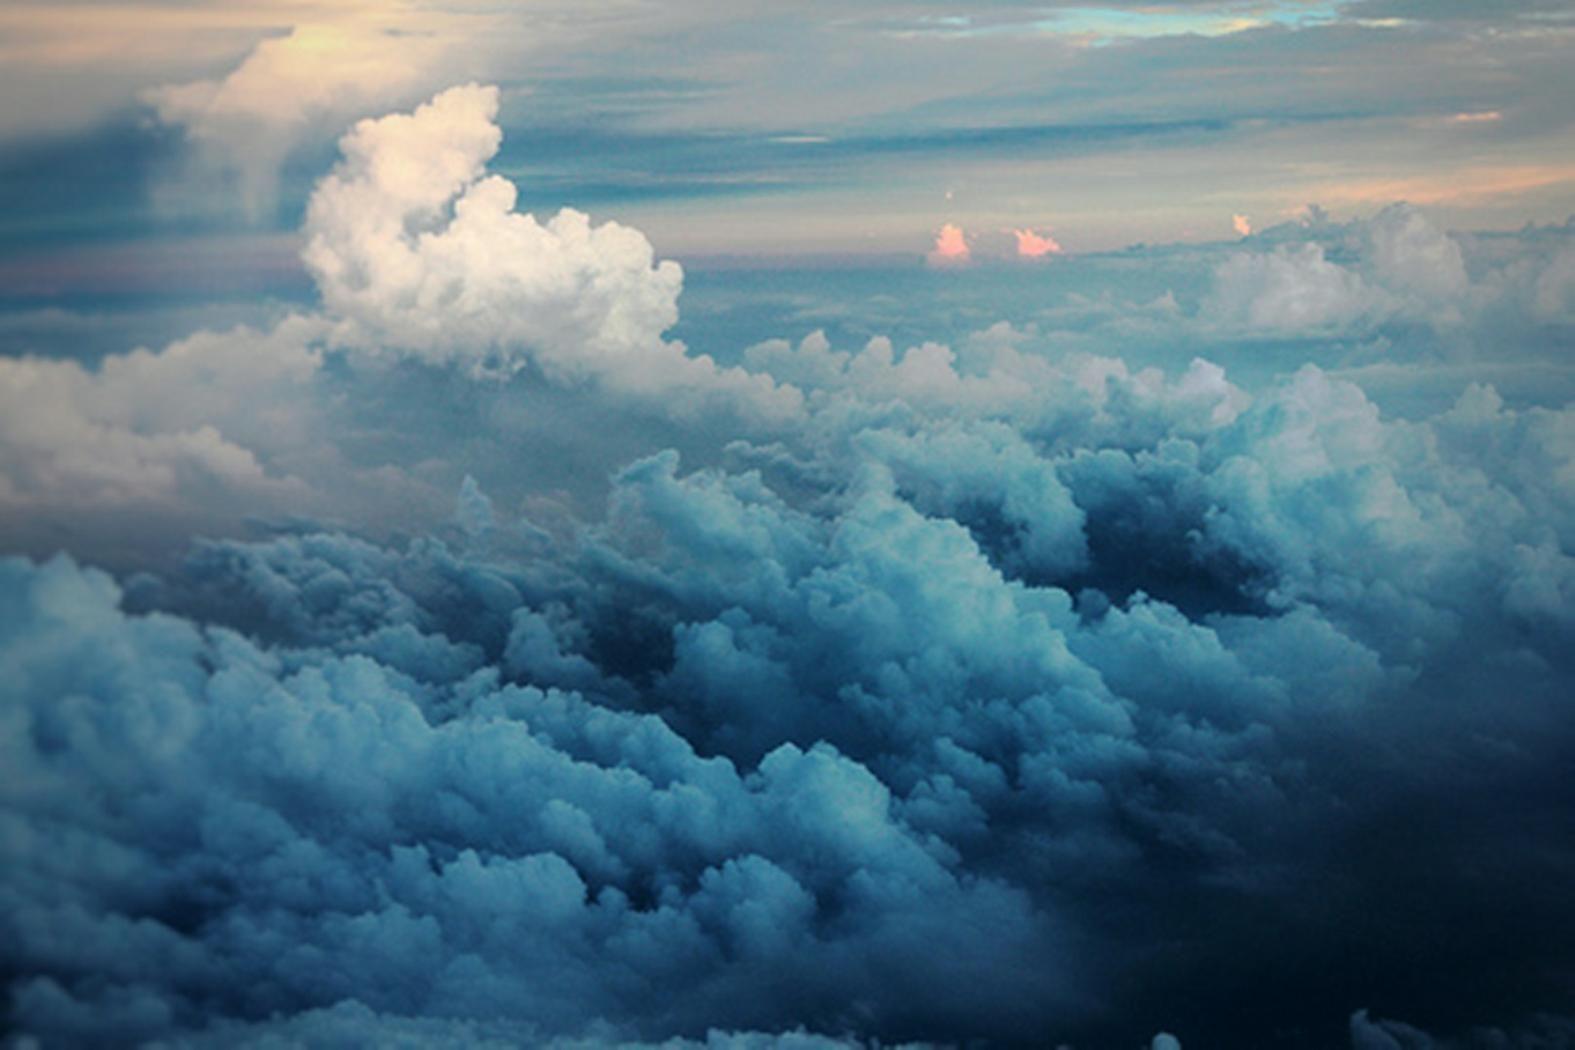 cloud photography tumblr